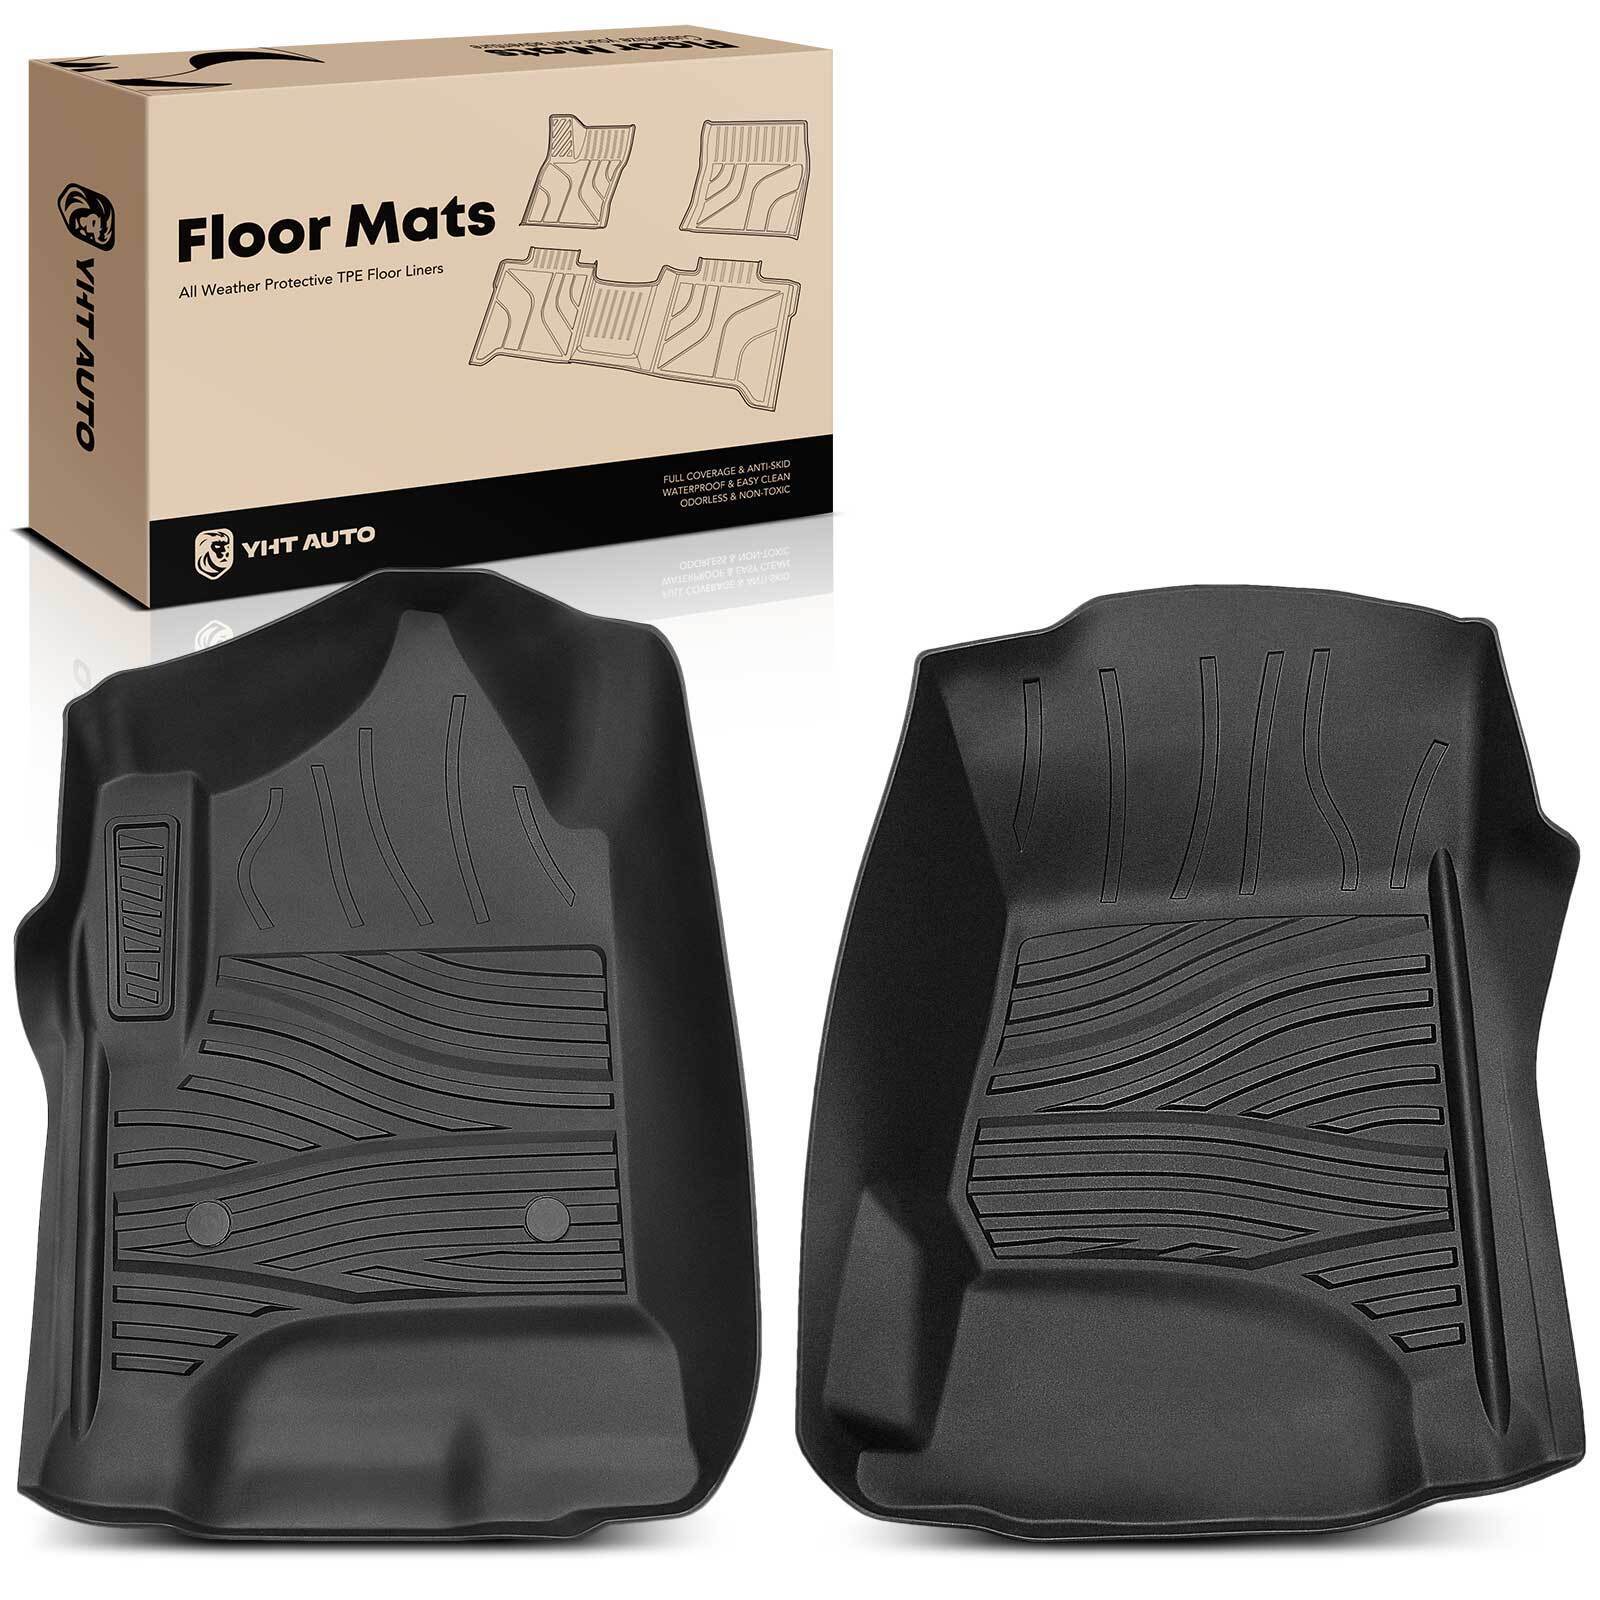 2pcs Black Floor Mats for Chevy Silverado 1500 GMC Sierra 1500 2014-2018 Front